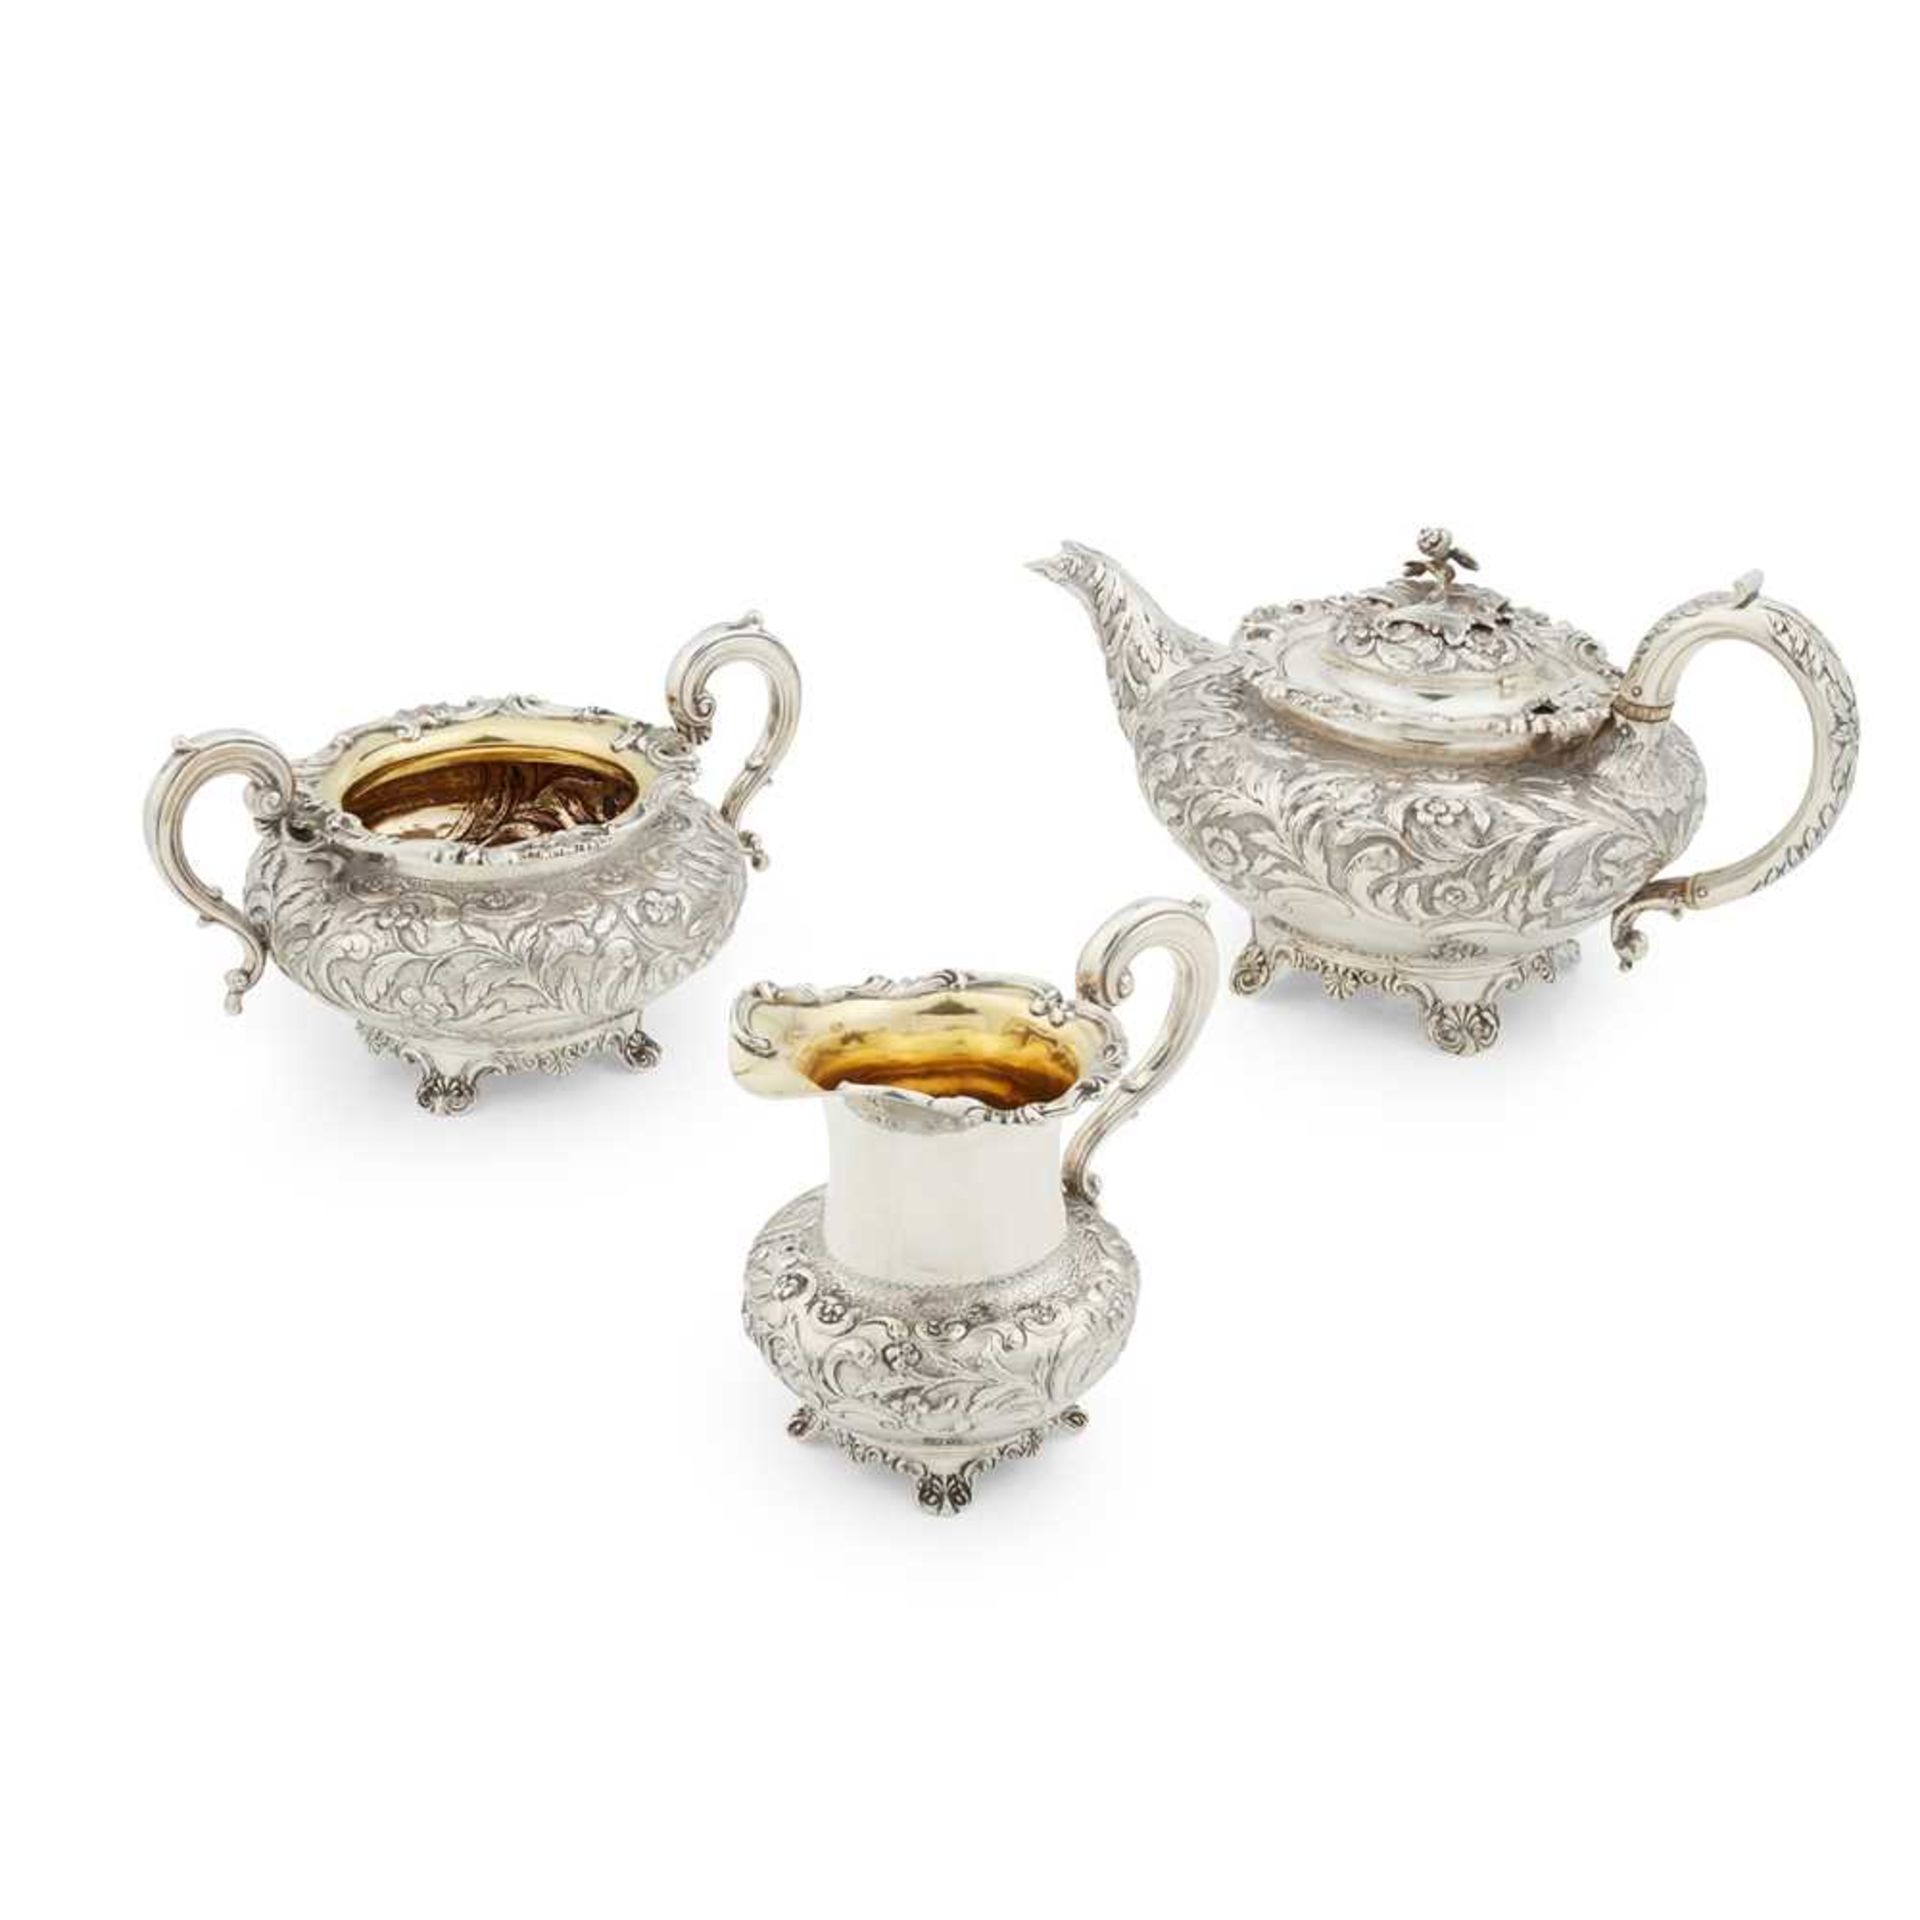 A William IV three piece tea service